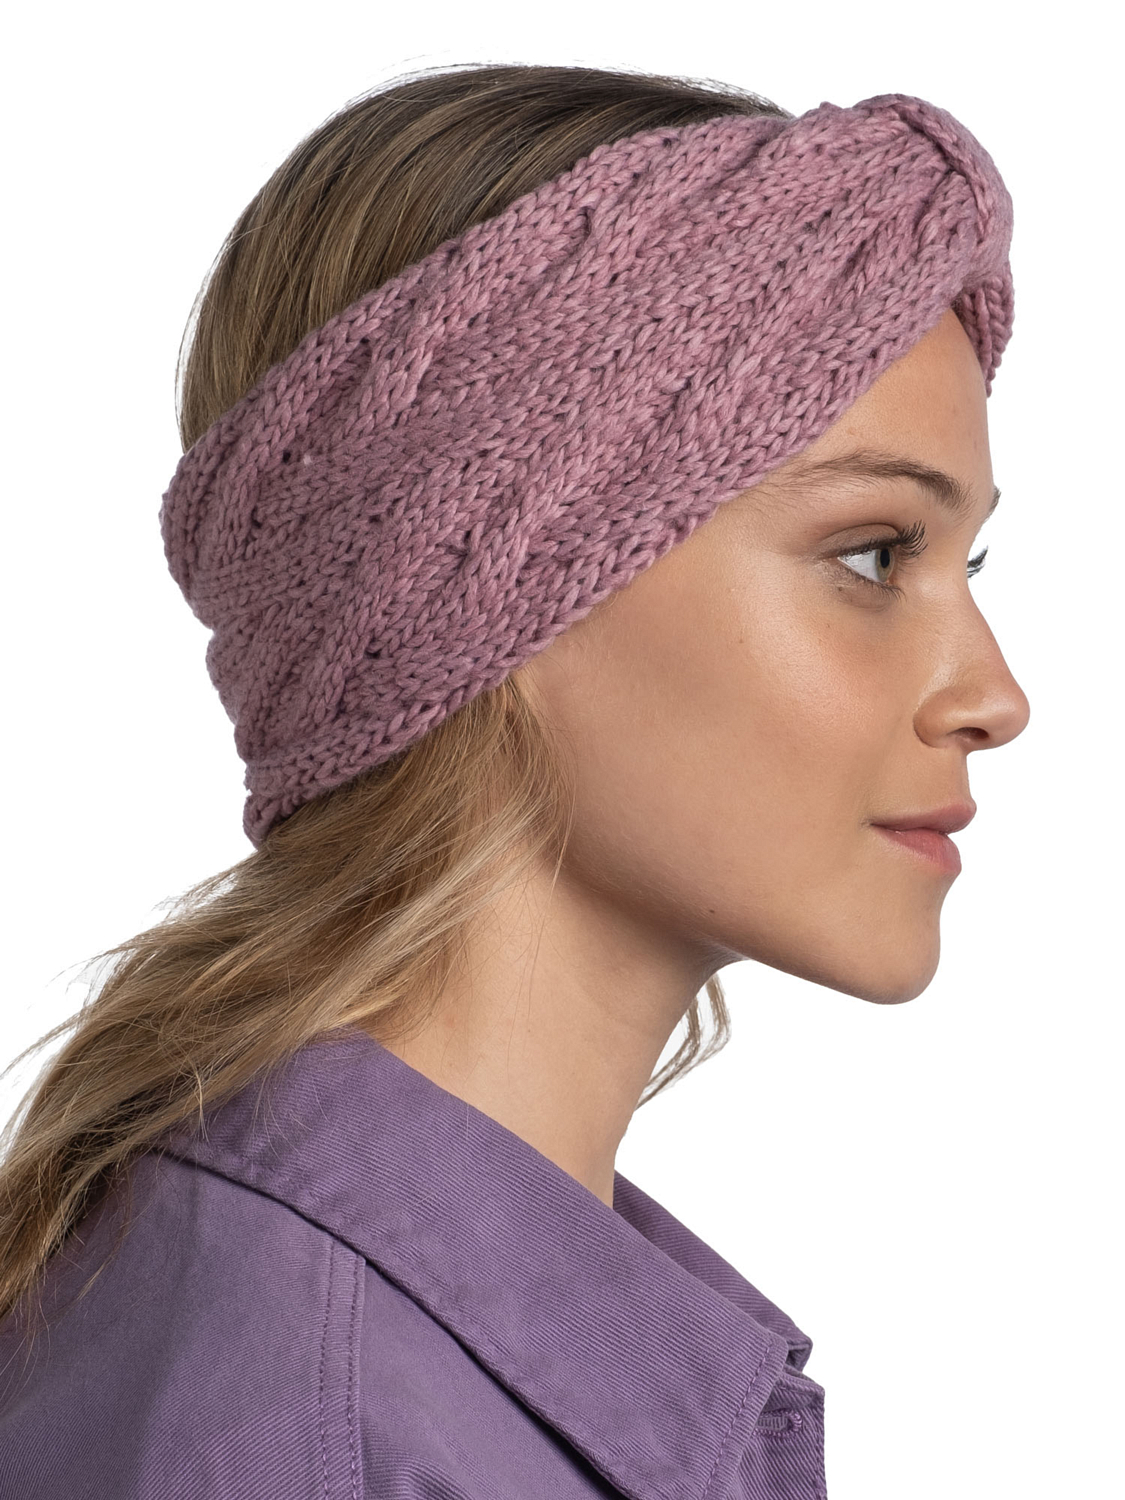 Повязка Buff Knitted Headband Caryn Rosé – купить по цене 1990 руб